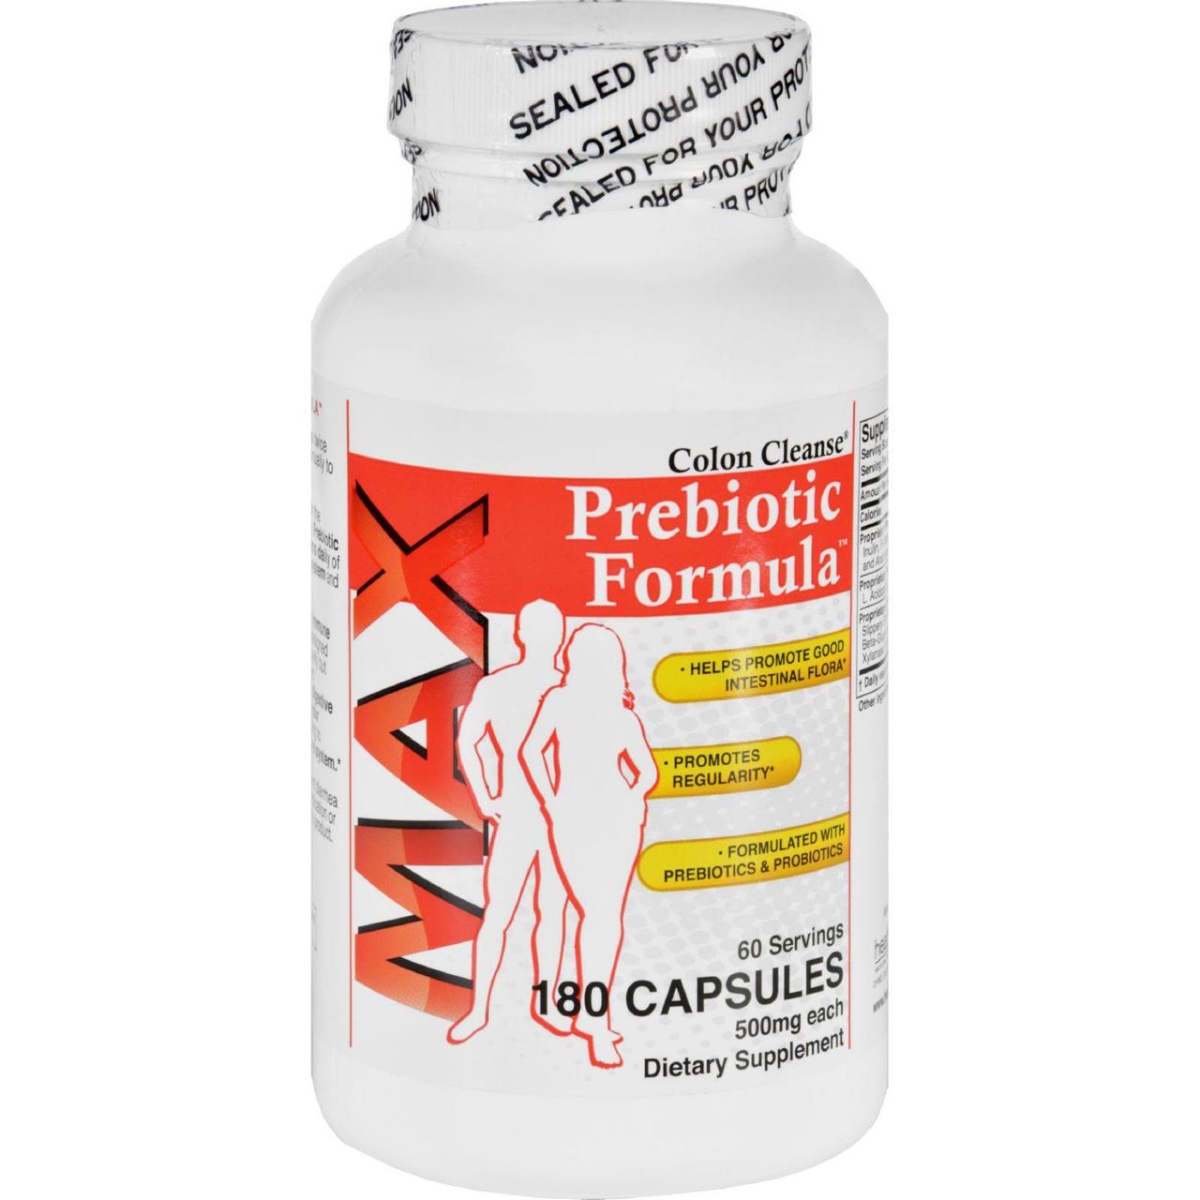 Health Plus Hg1728021 Prebiotic Formula - Colon Cleanse Max, 180 Capsules